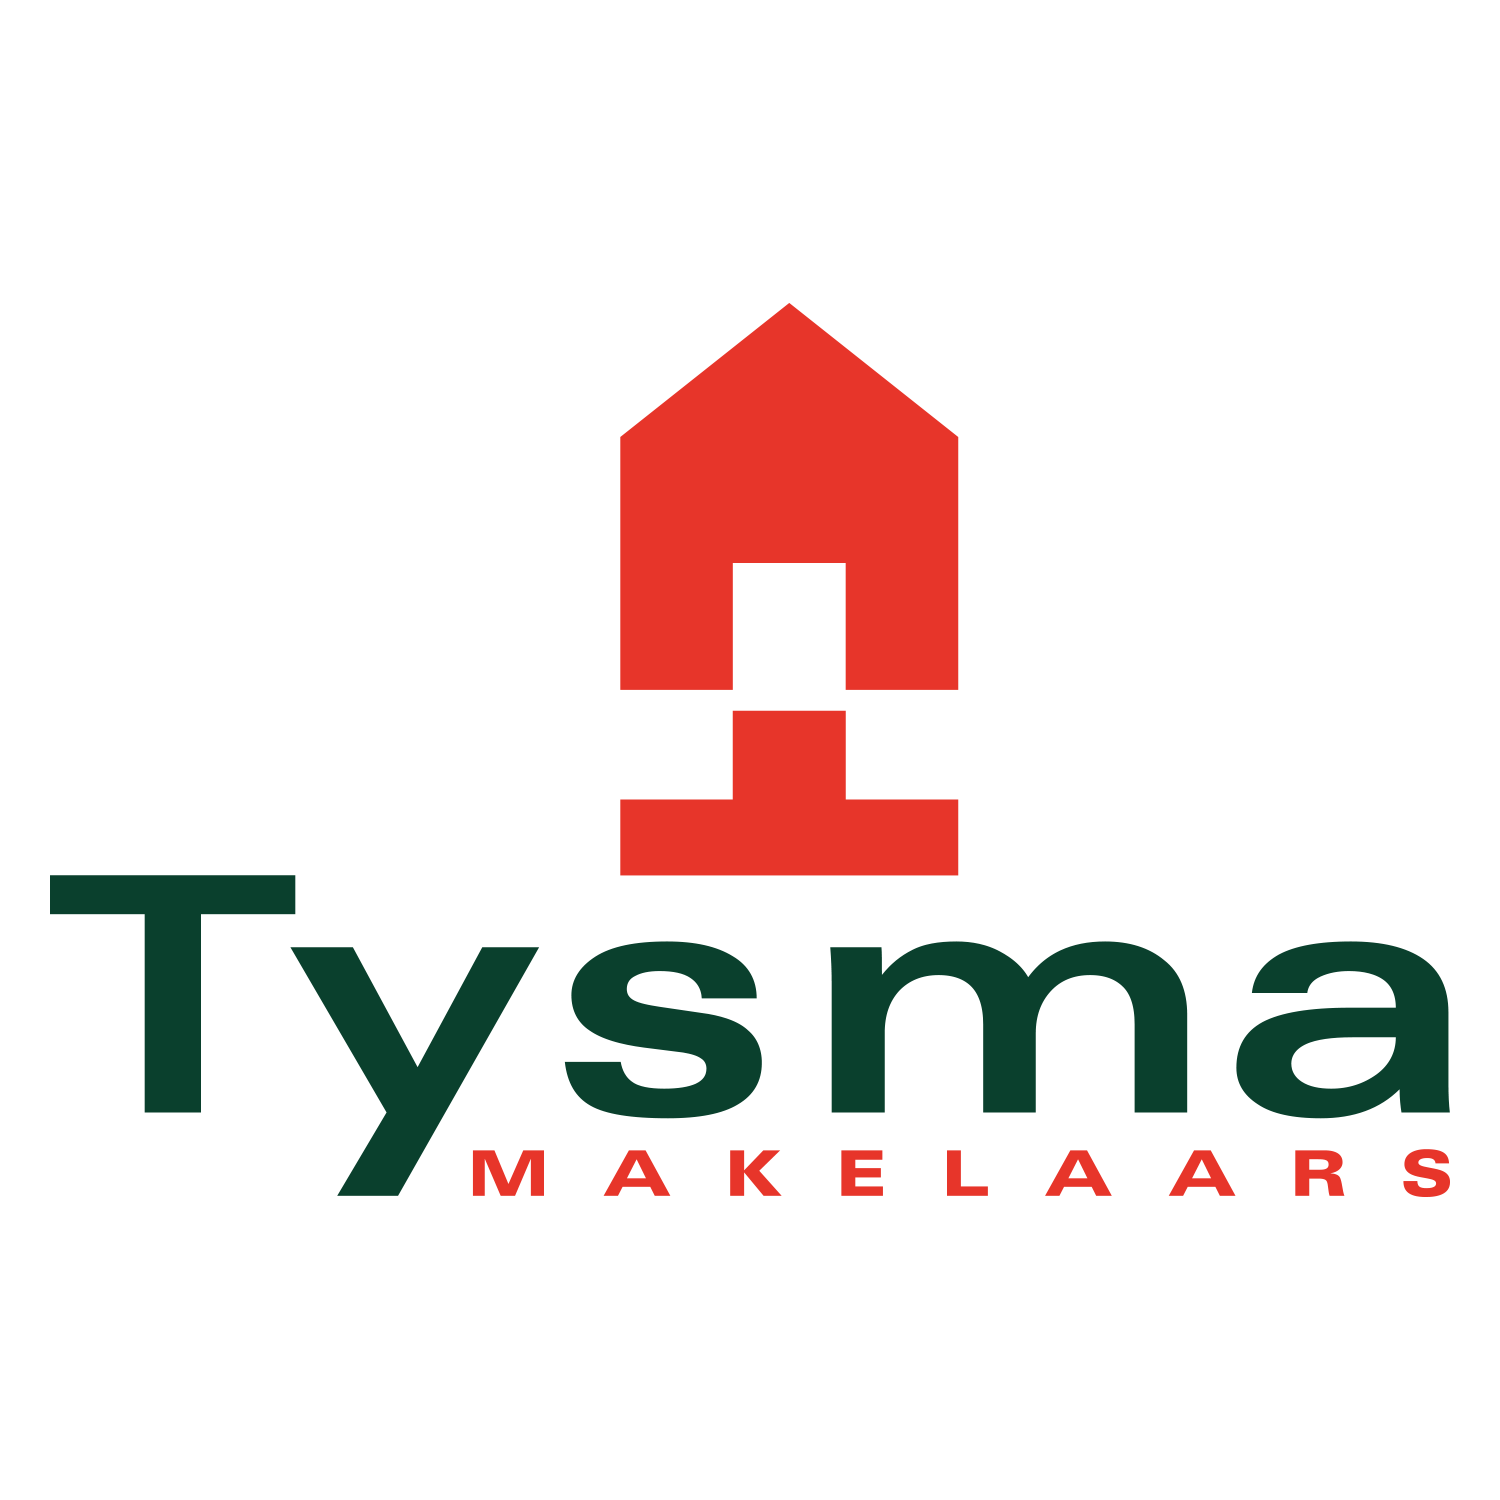 (c) Tysma.nl